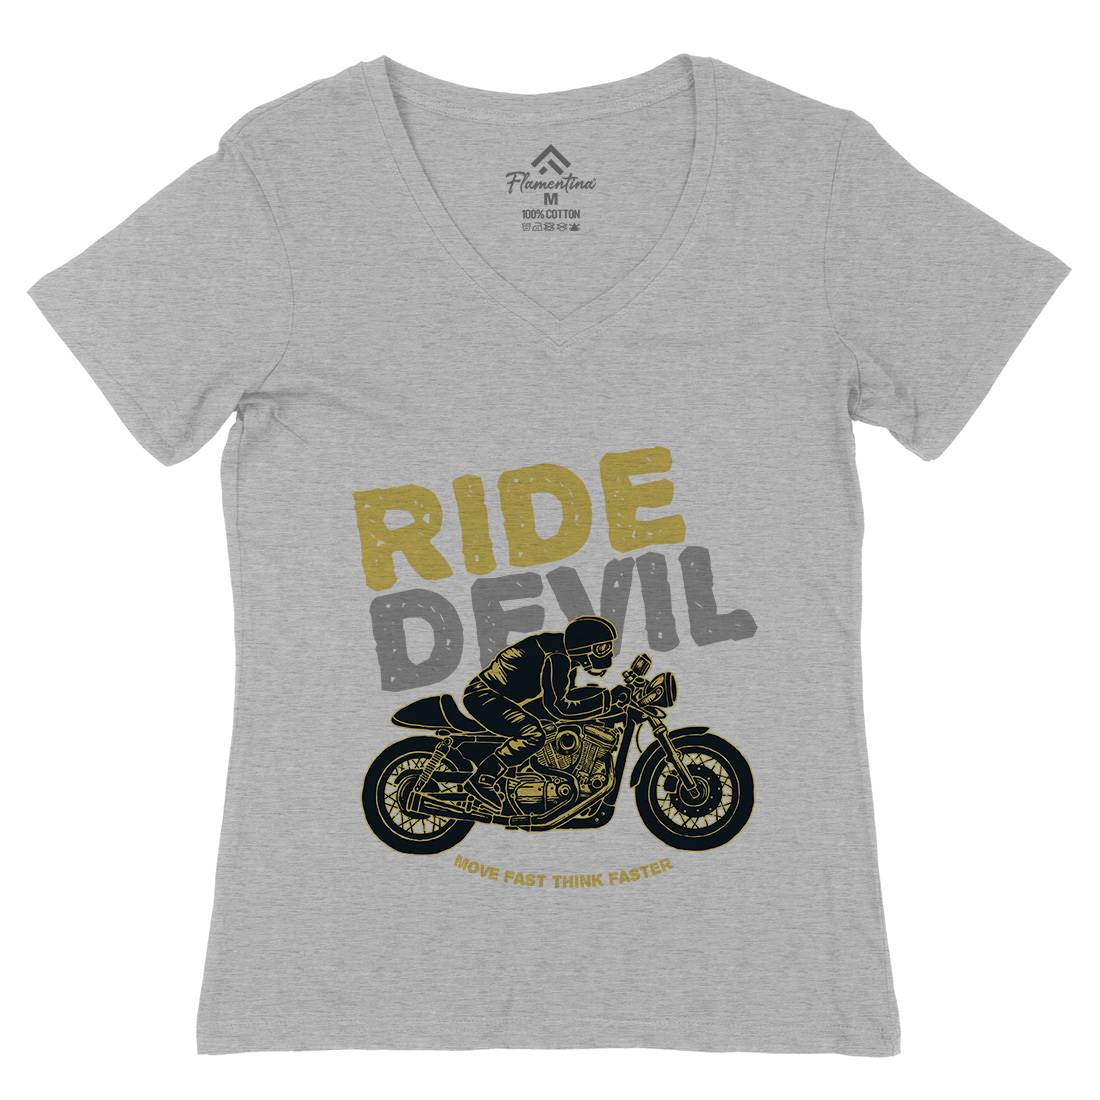 Ride Devil Womens Organic V-Neck T-Shirt Motorcycles A364